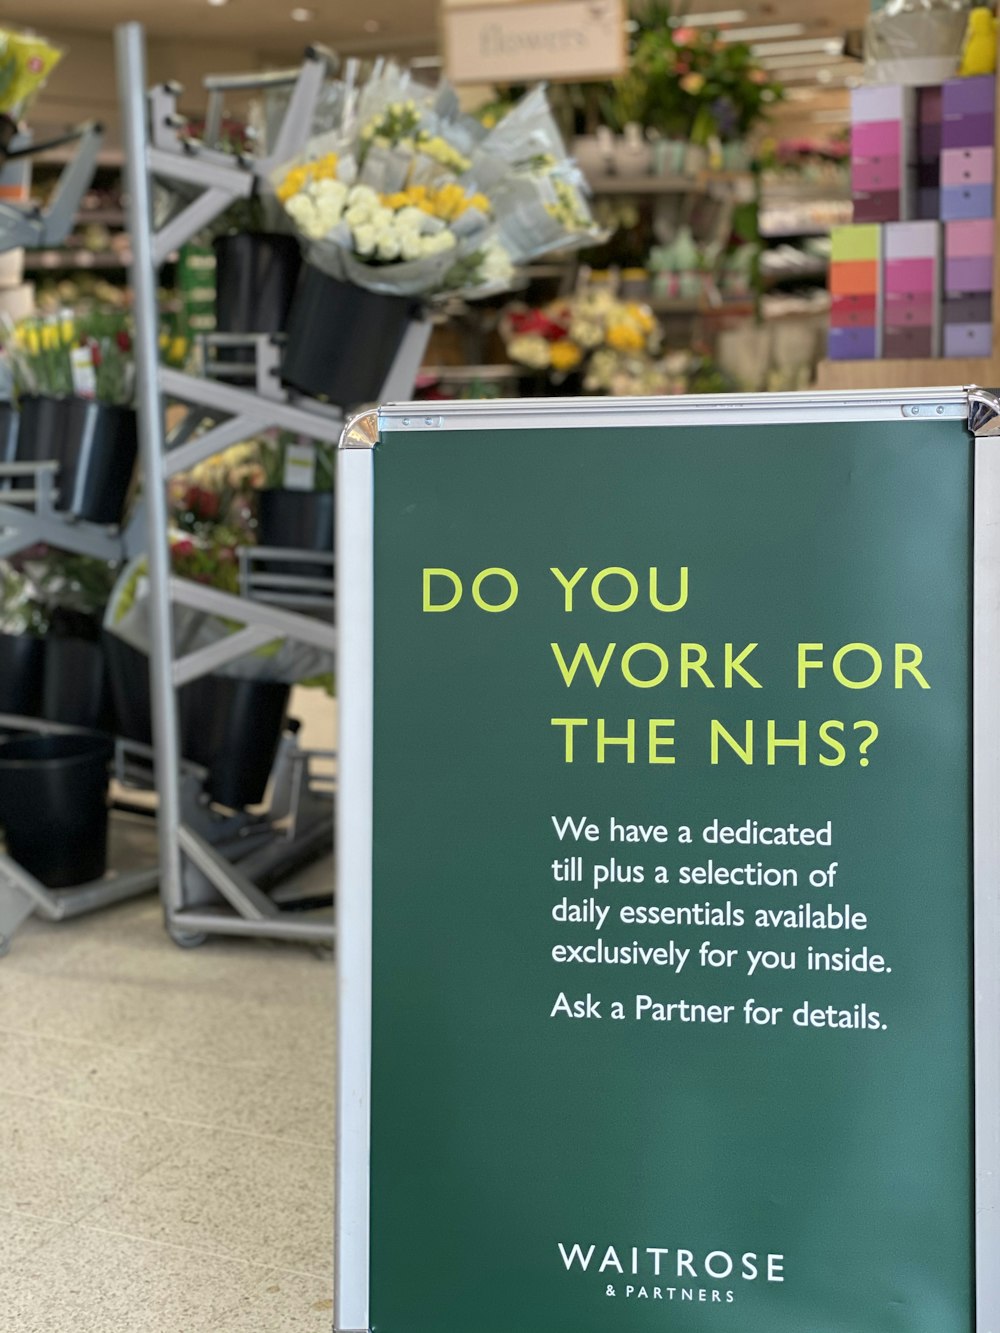 NHS에서 일하십니까?